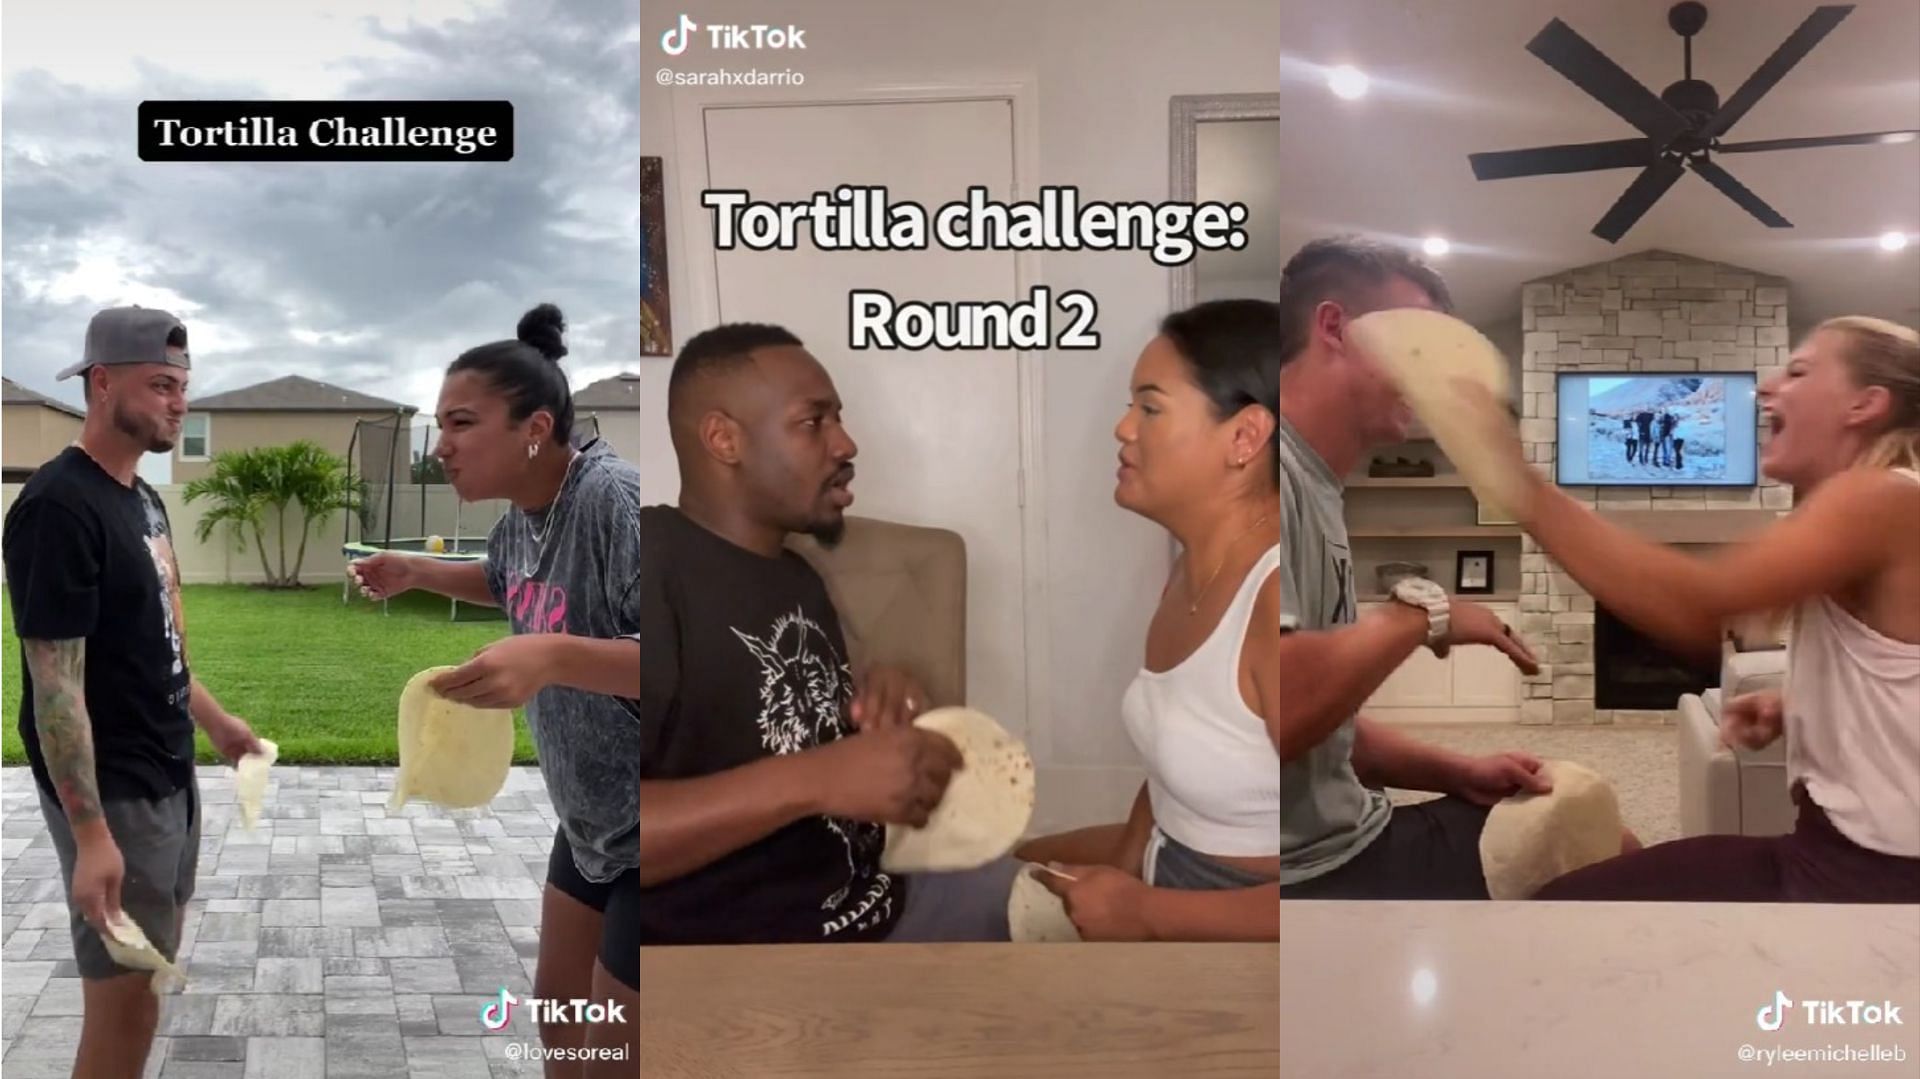 What is the tortilla challenge on TikTok?